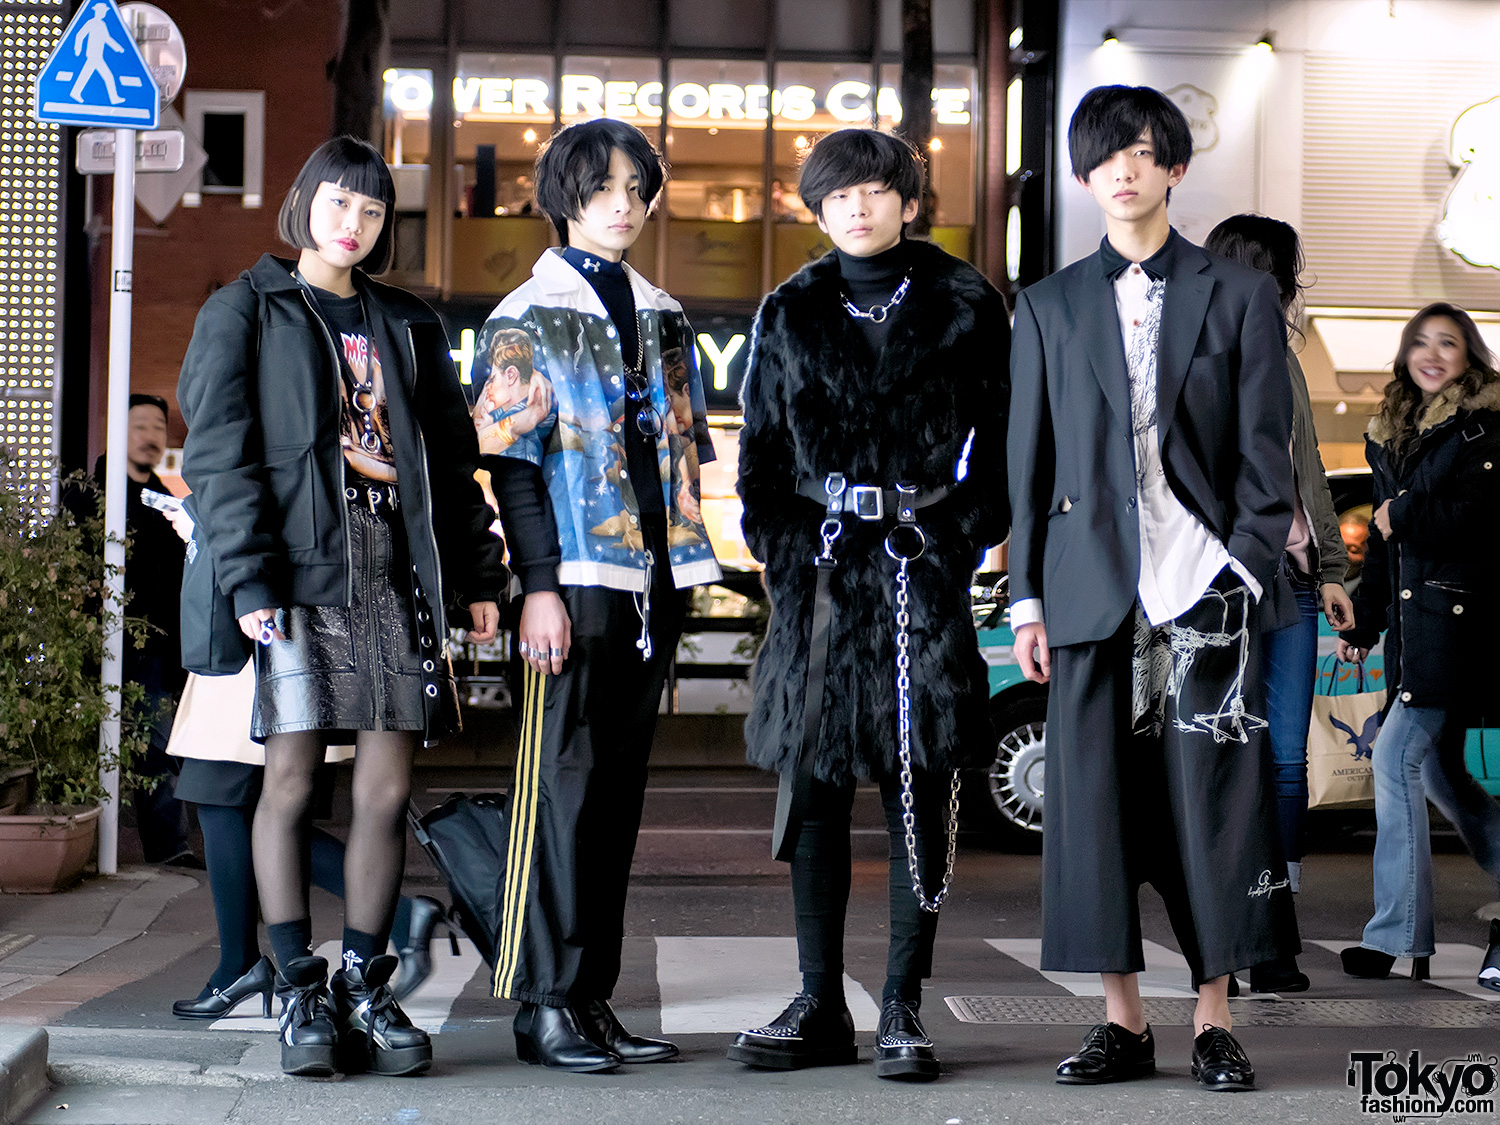 Teen Japanese Teens Fashion 30